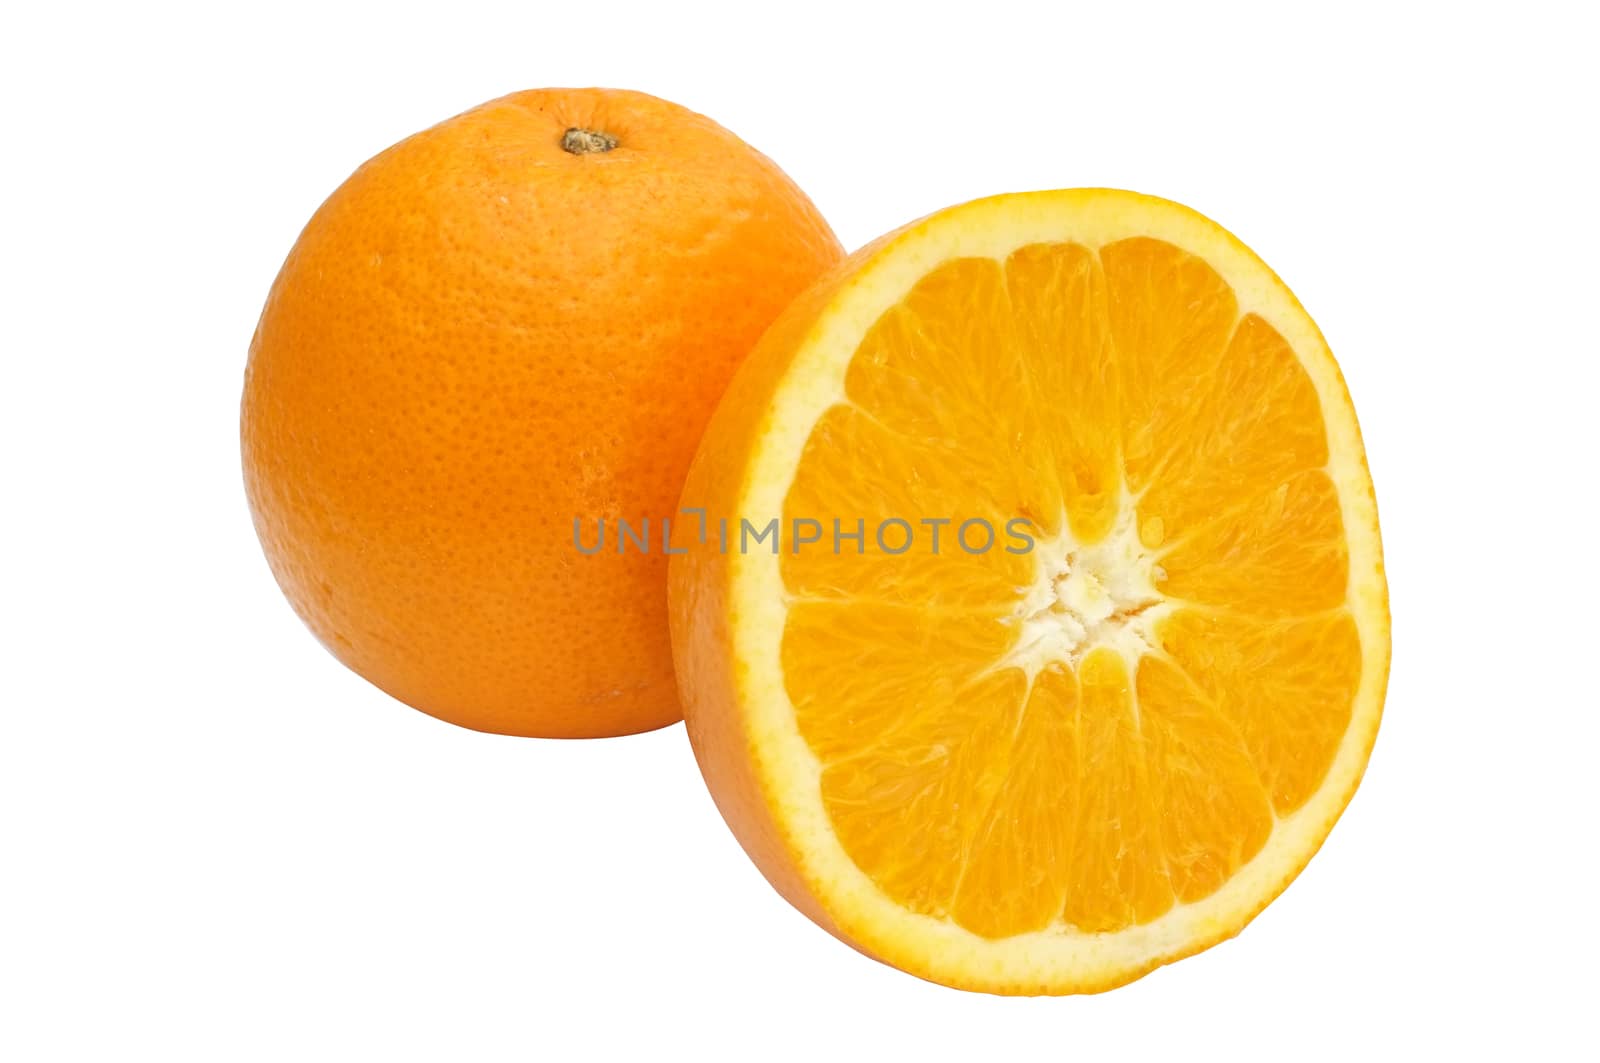 orange and slice of orange by Hepjam